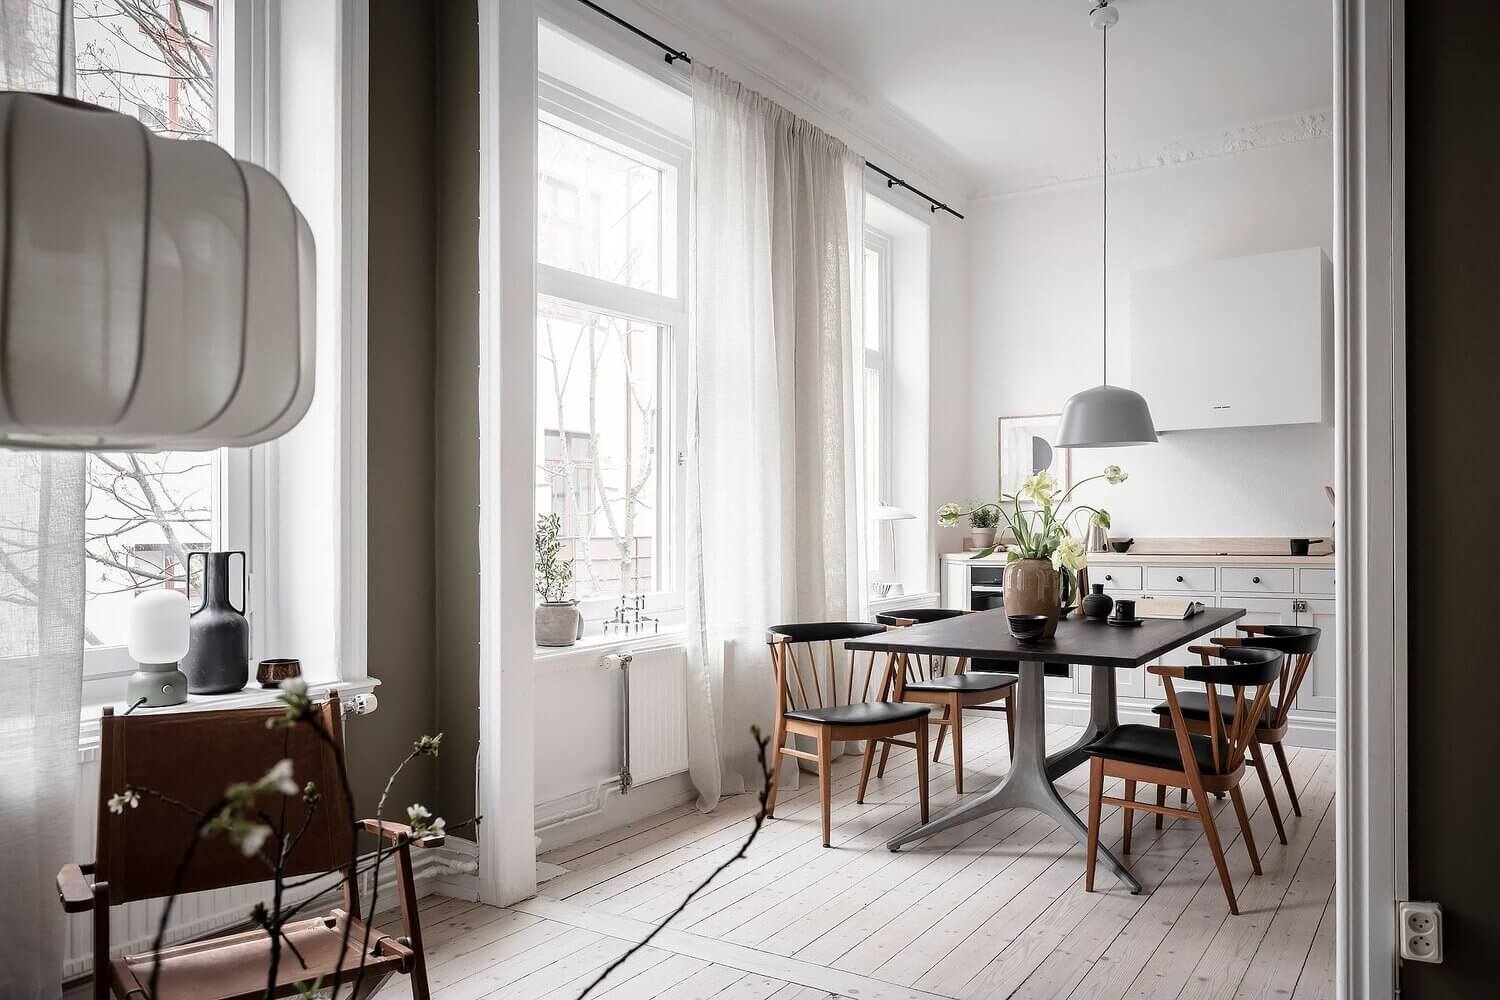 AScandinavianApartmentWithOliveGreenWalls TheNordroom10 A Scandinavian Apartment With Olive Green Walls